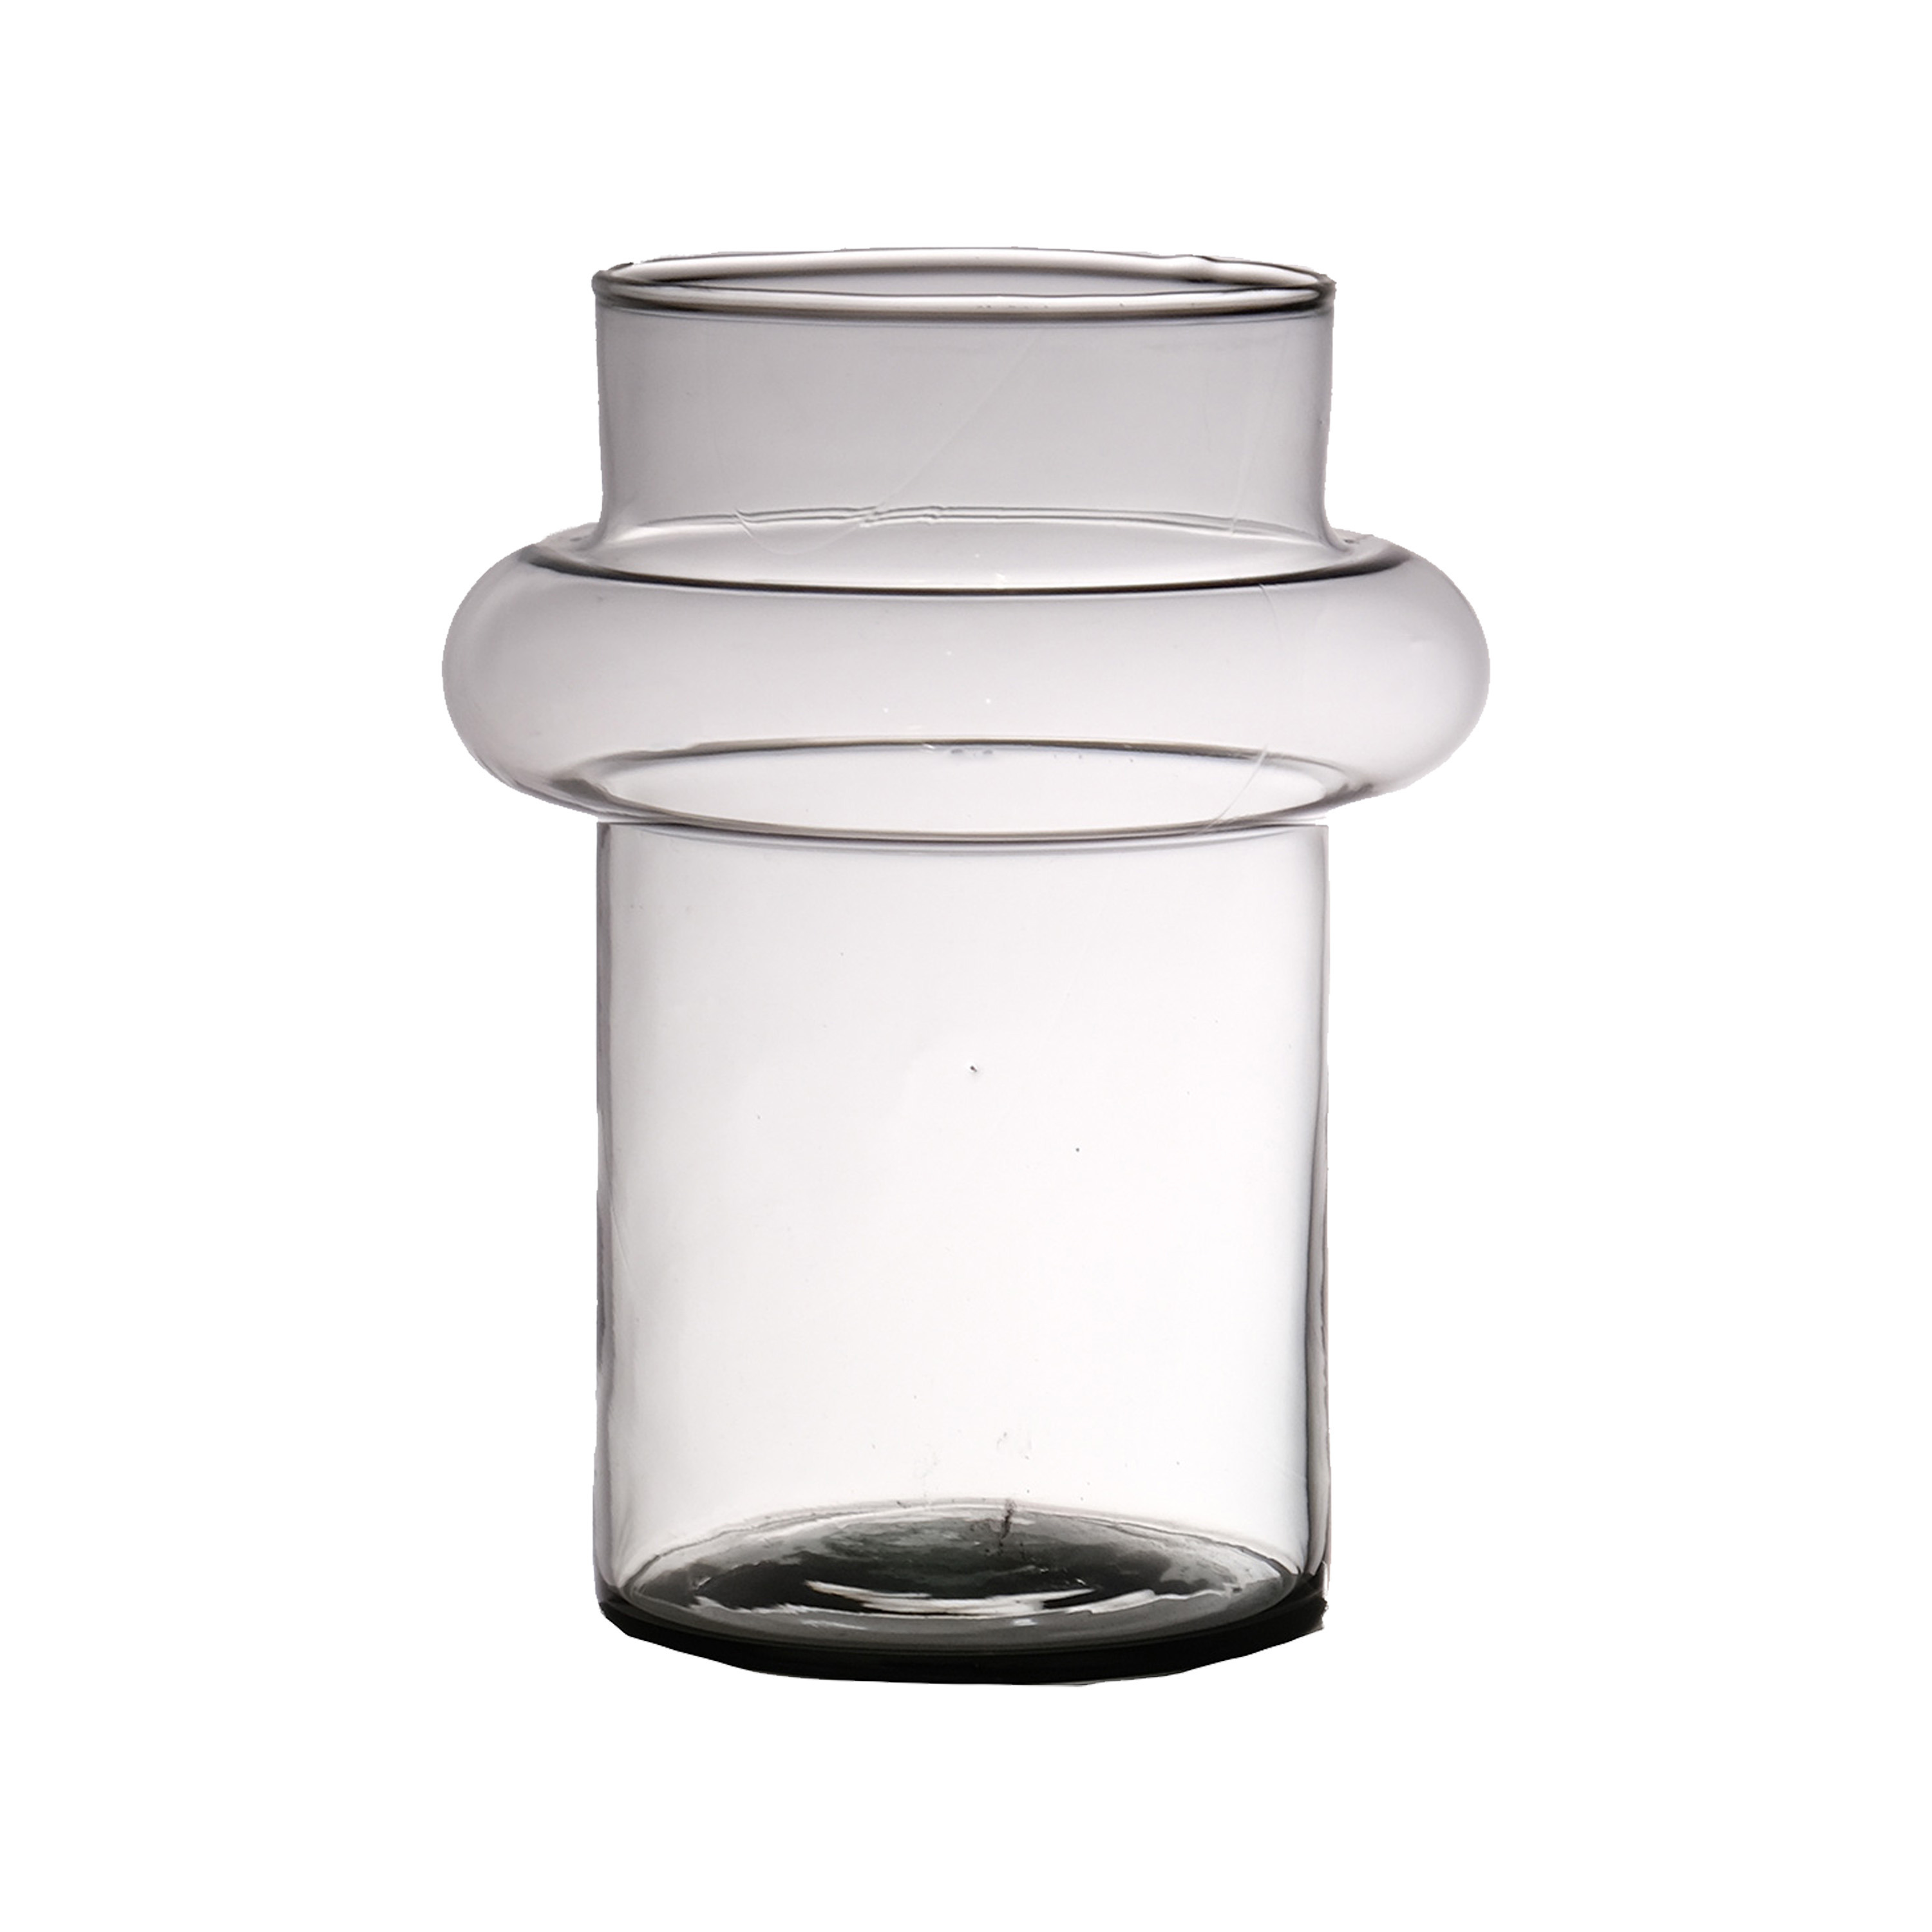 Hakbijl Glass Bloemenvaas Luna - transparant - eco glas - D15 x H20 cm - cilinder vaas -